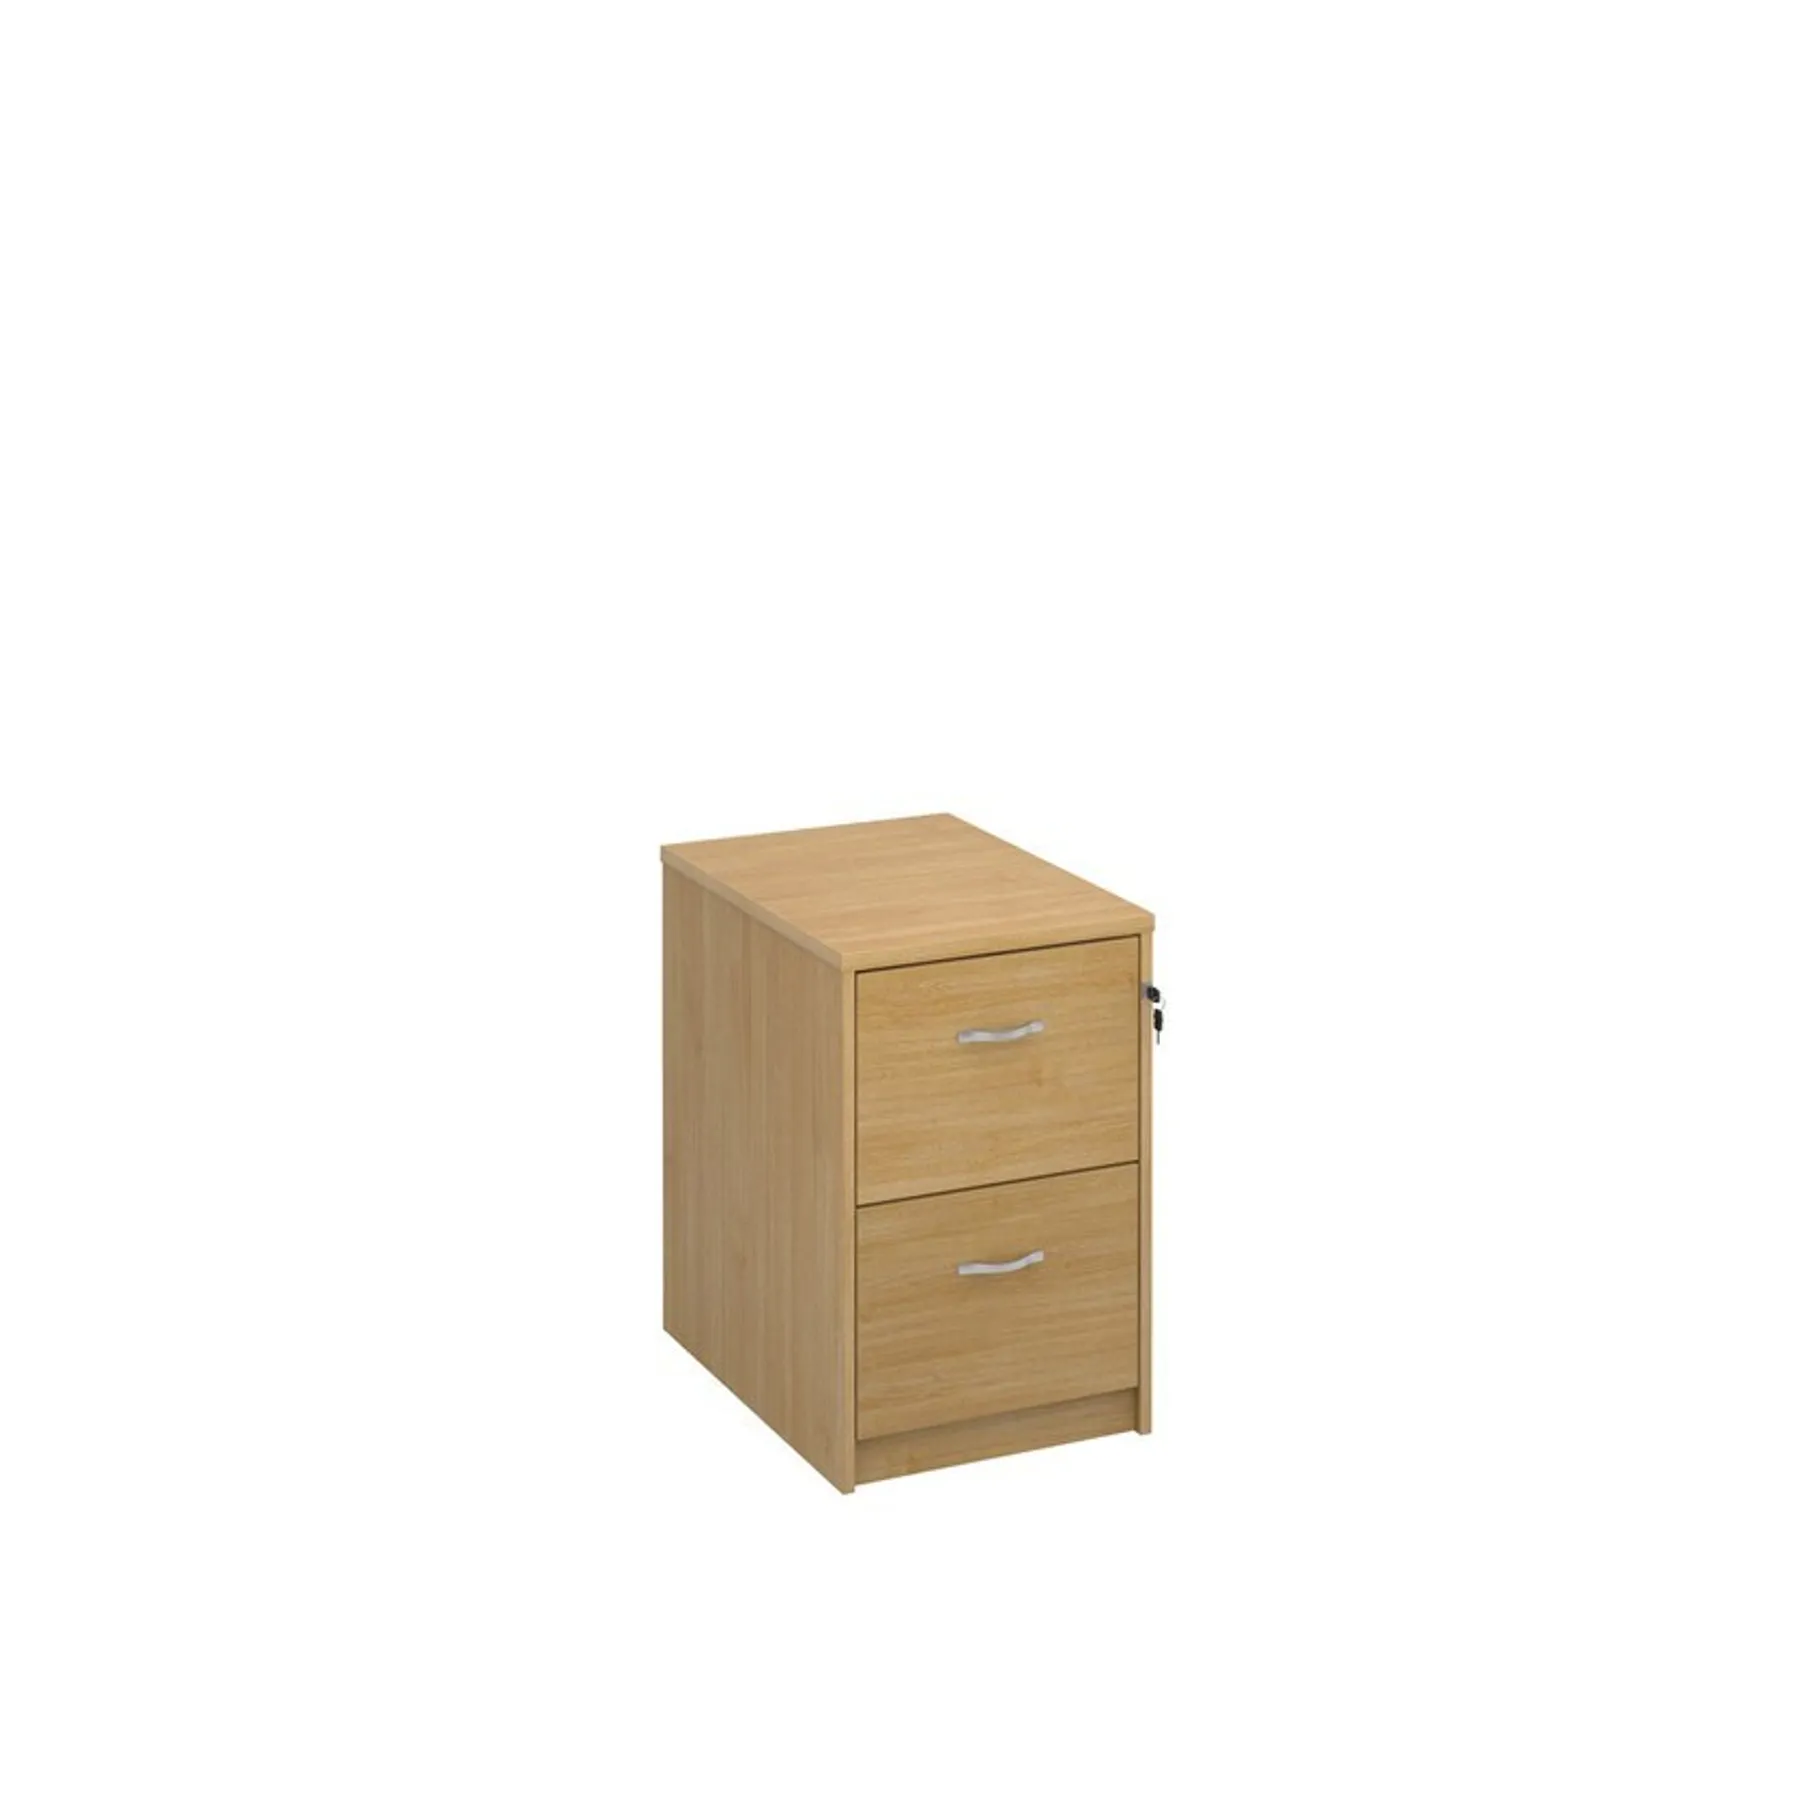 LOF filing cabinet oak 2 drawer